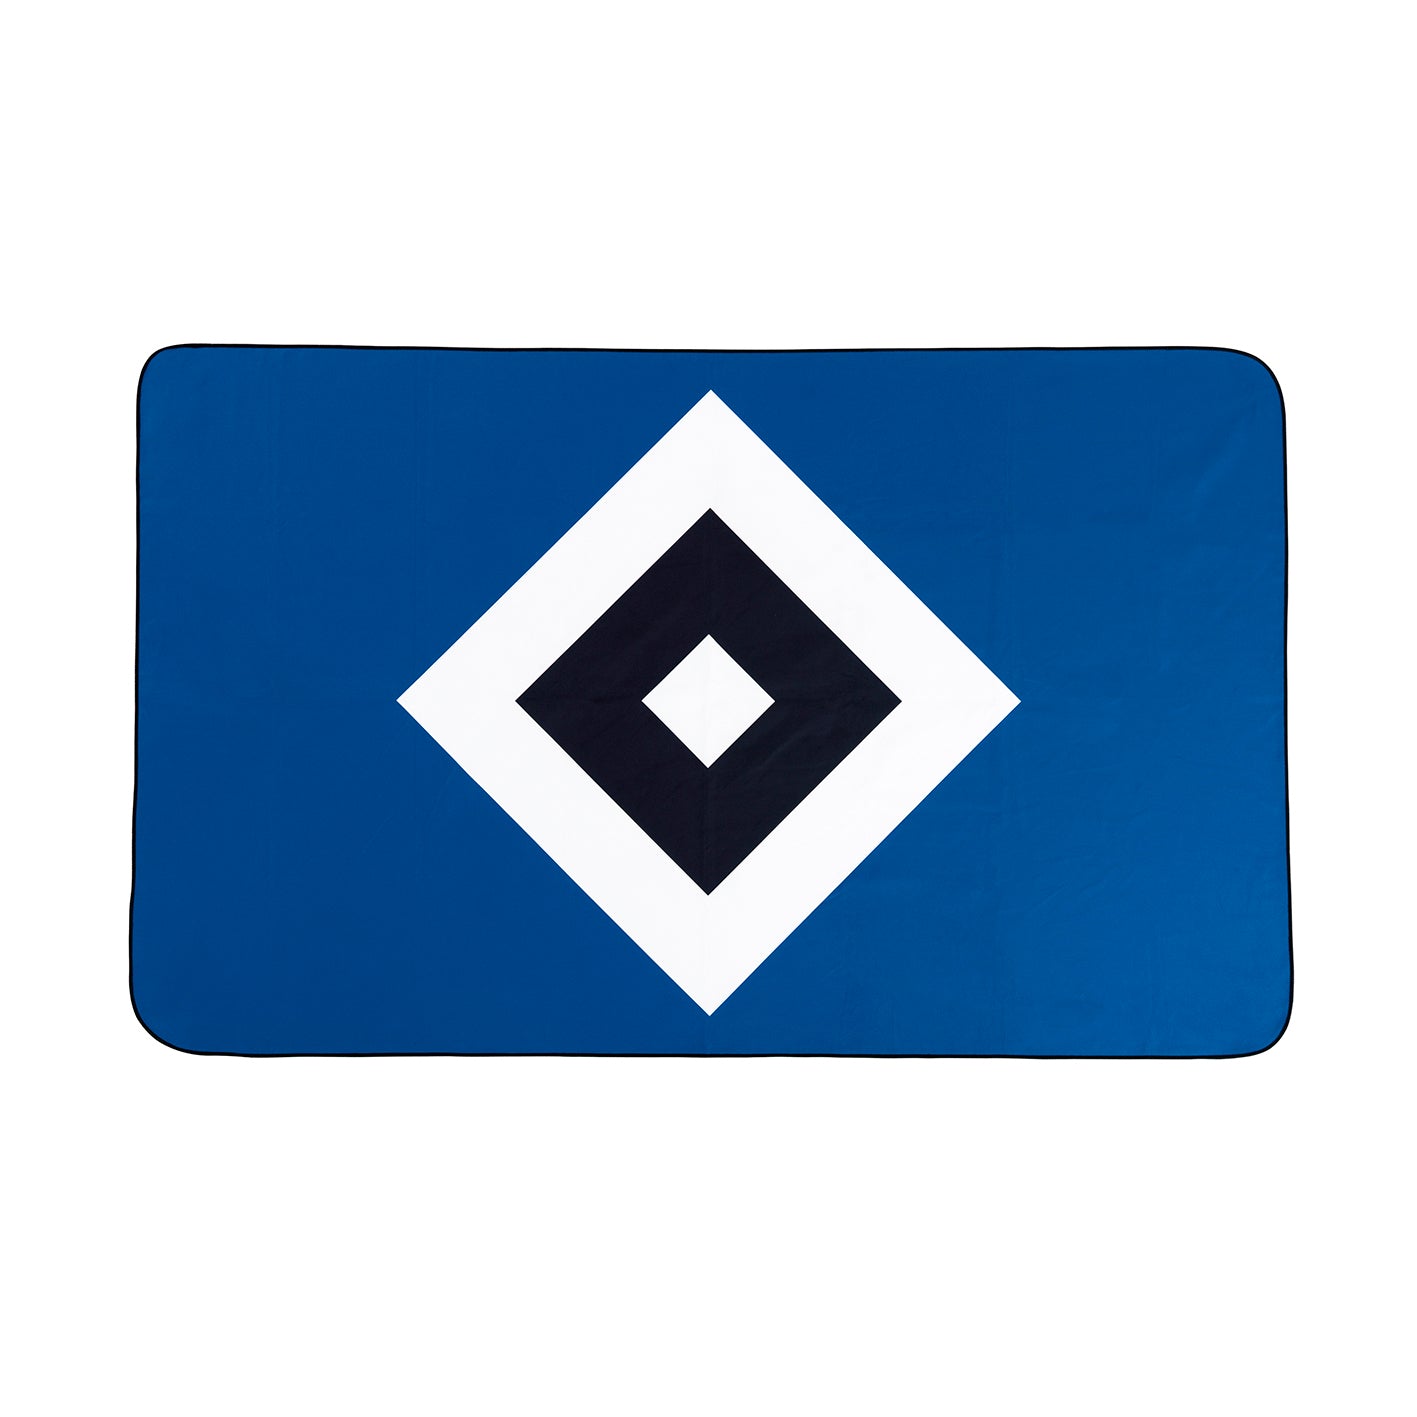 HSV Sporthandtuch Deluxe - 80x130 cm - blau